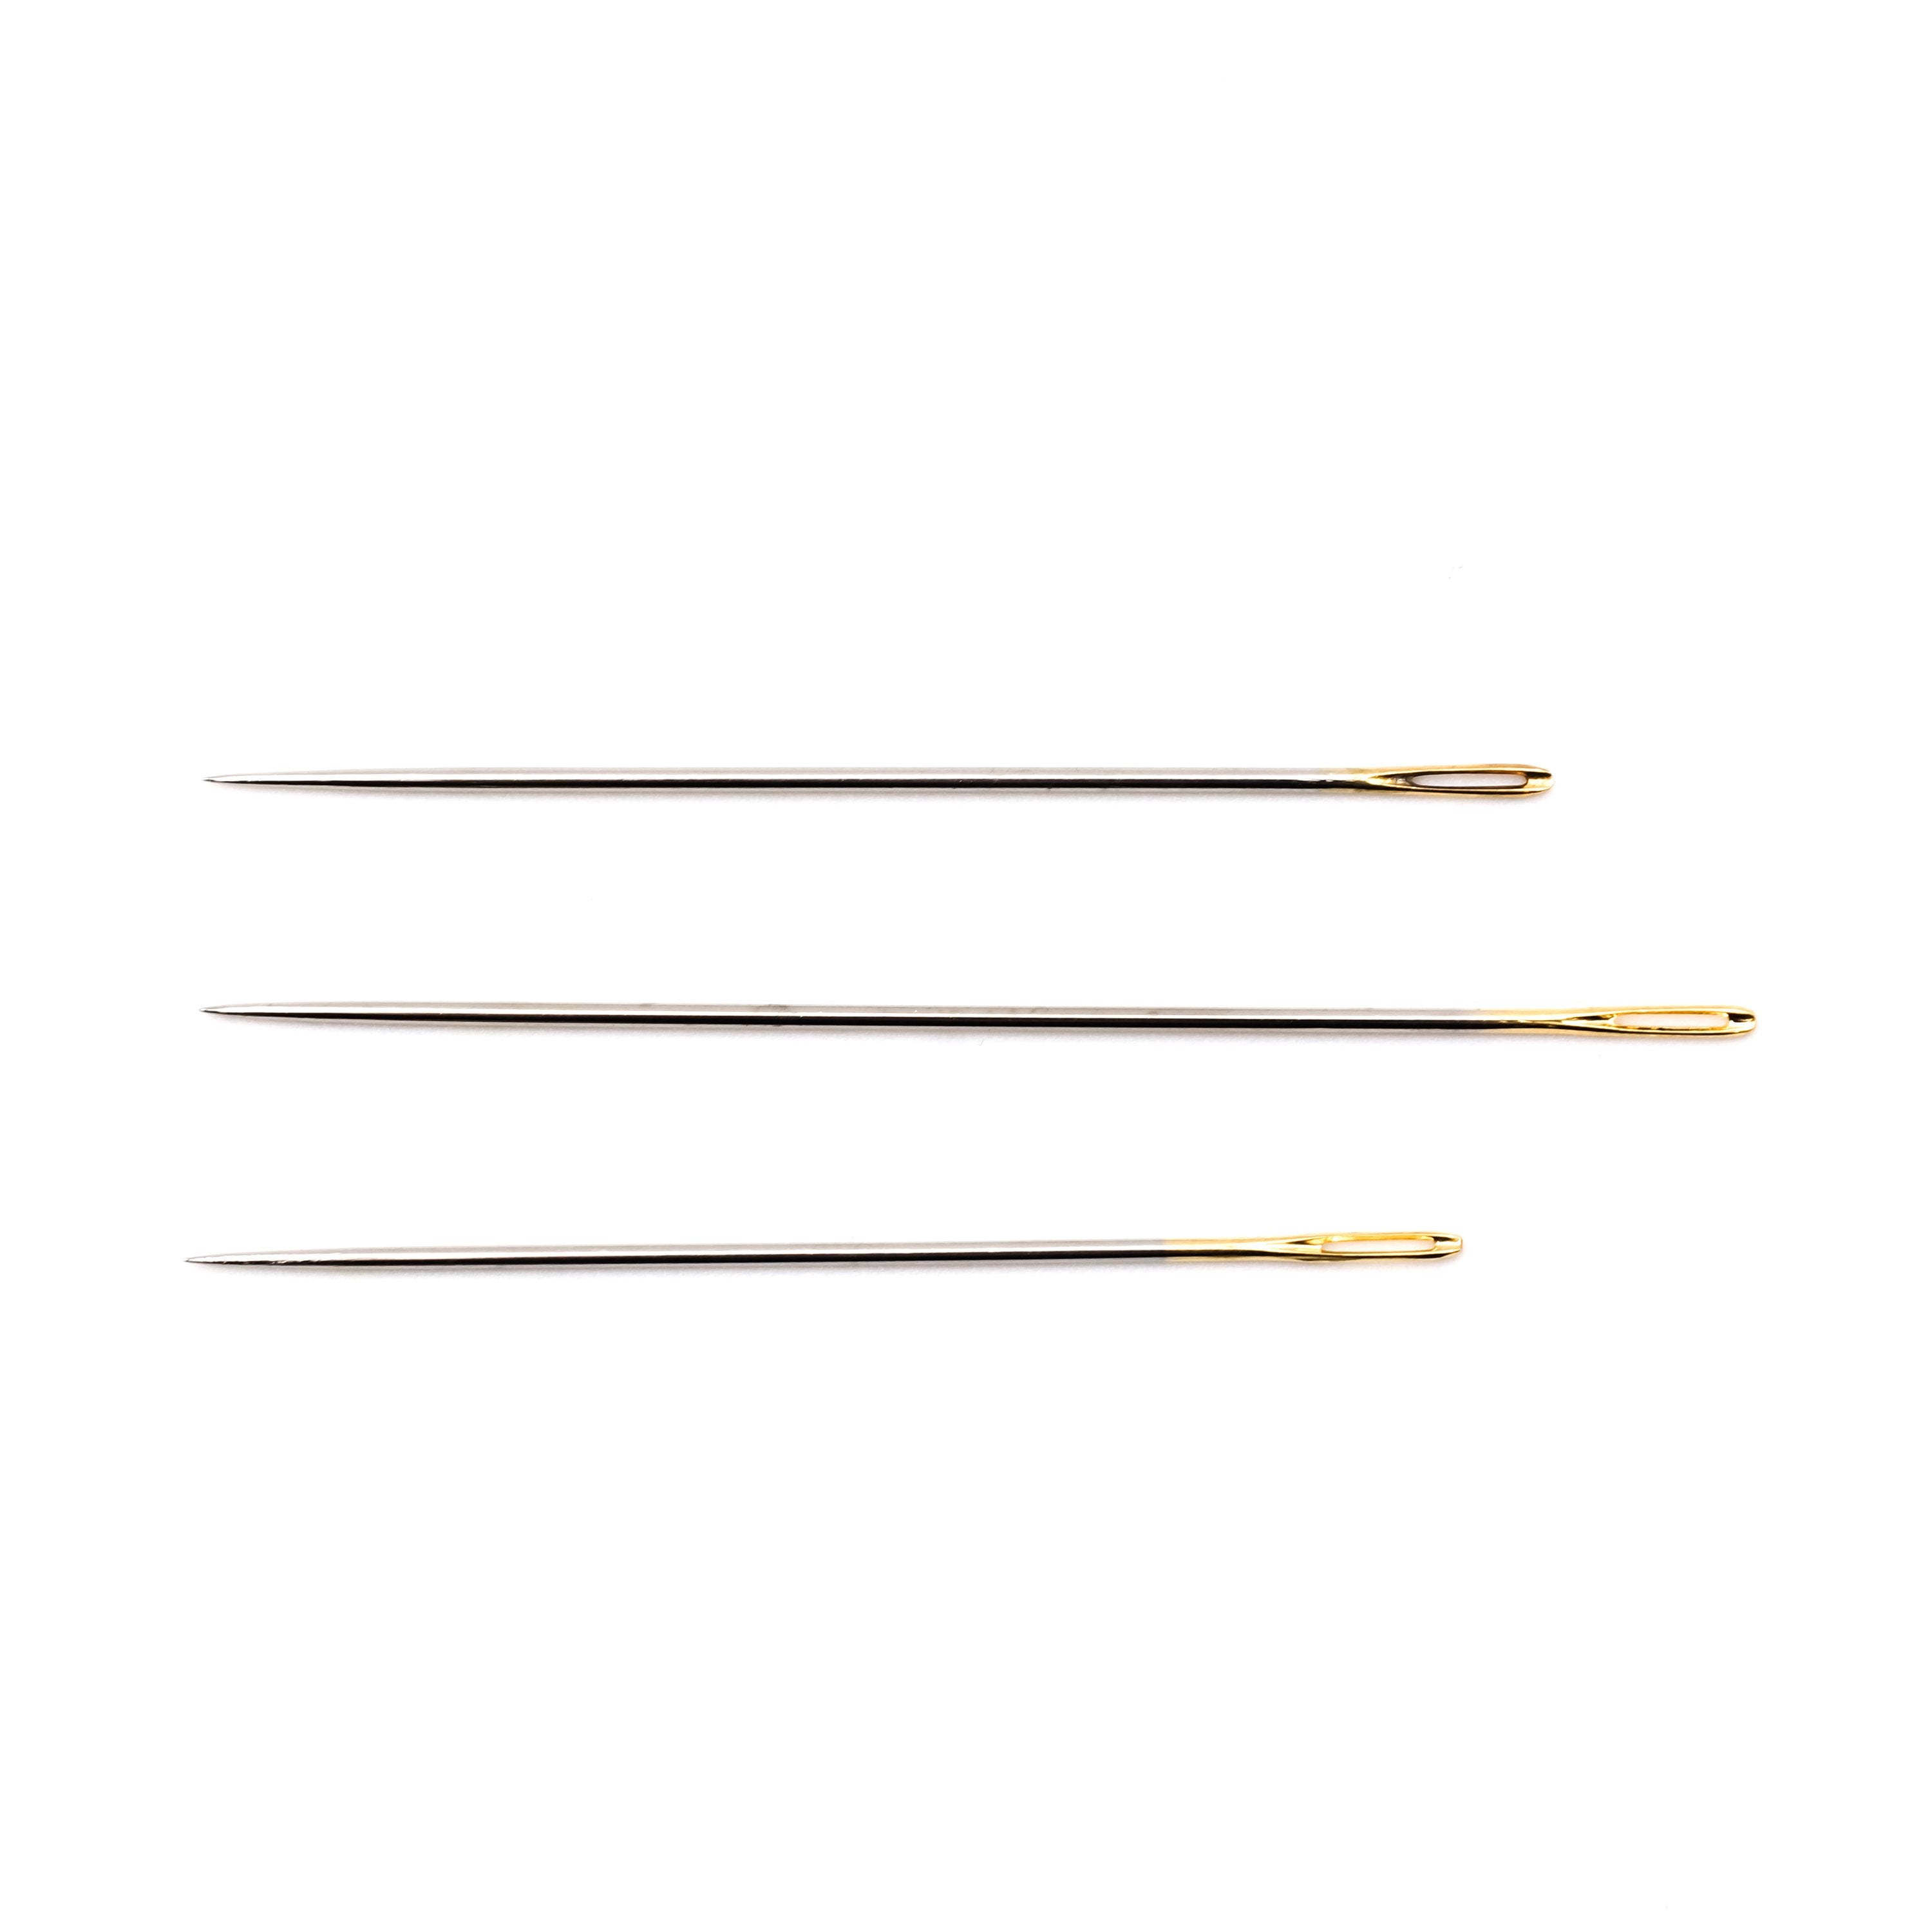 CLV - Sashiko Needles